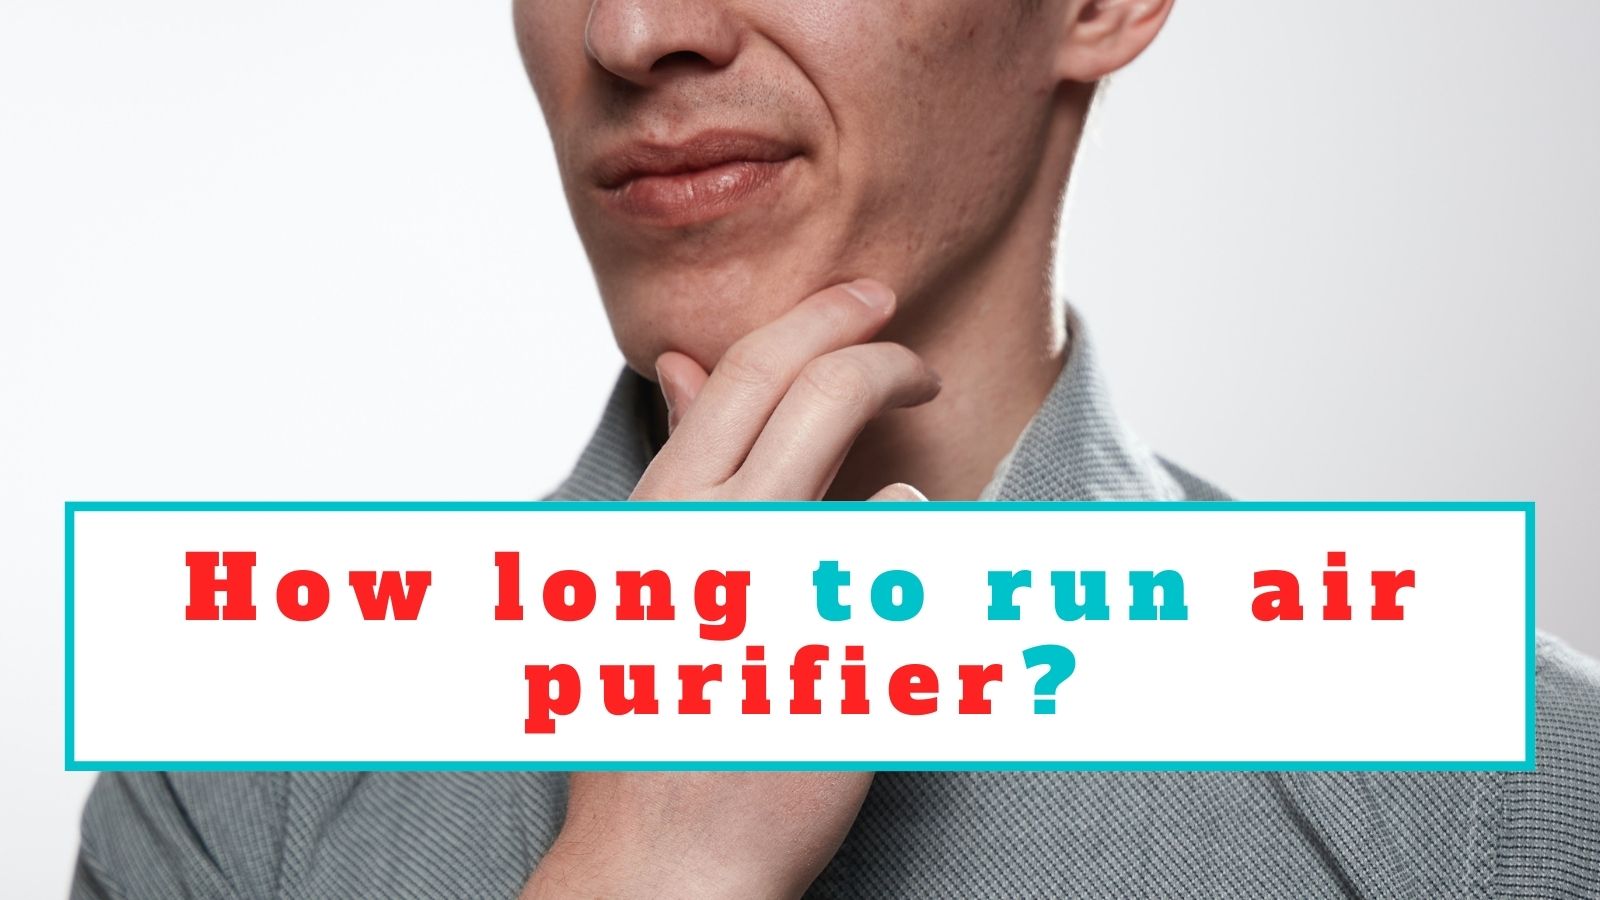 How long to run air purifier?